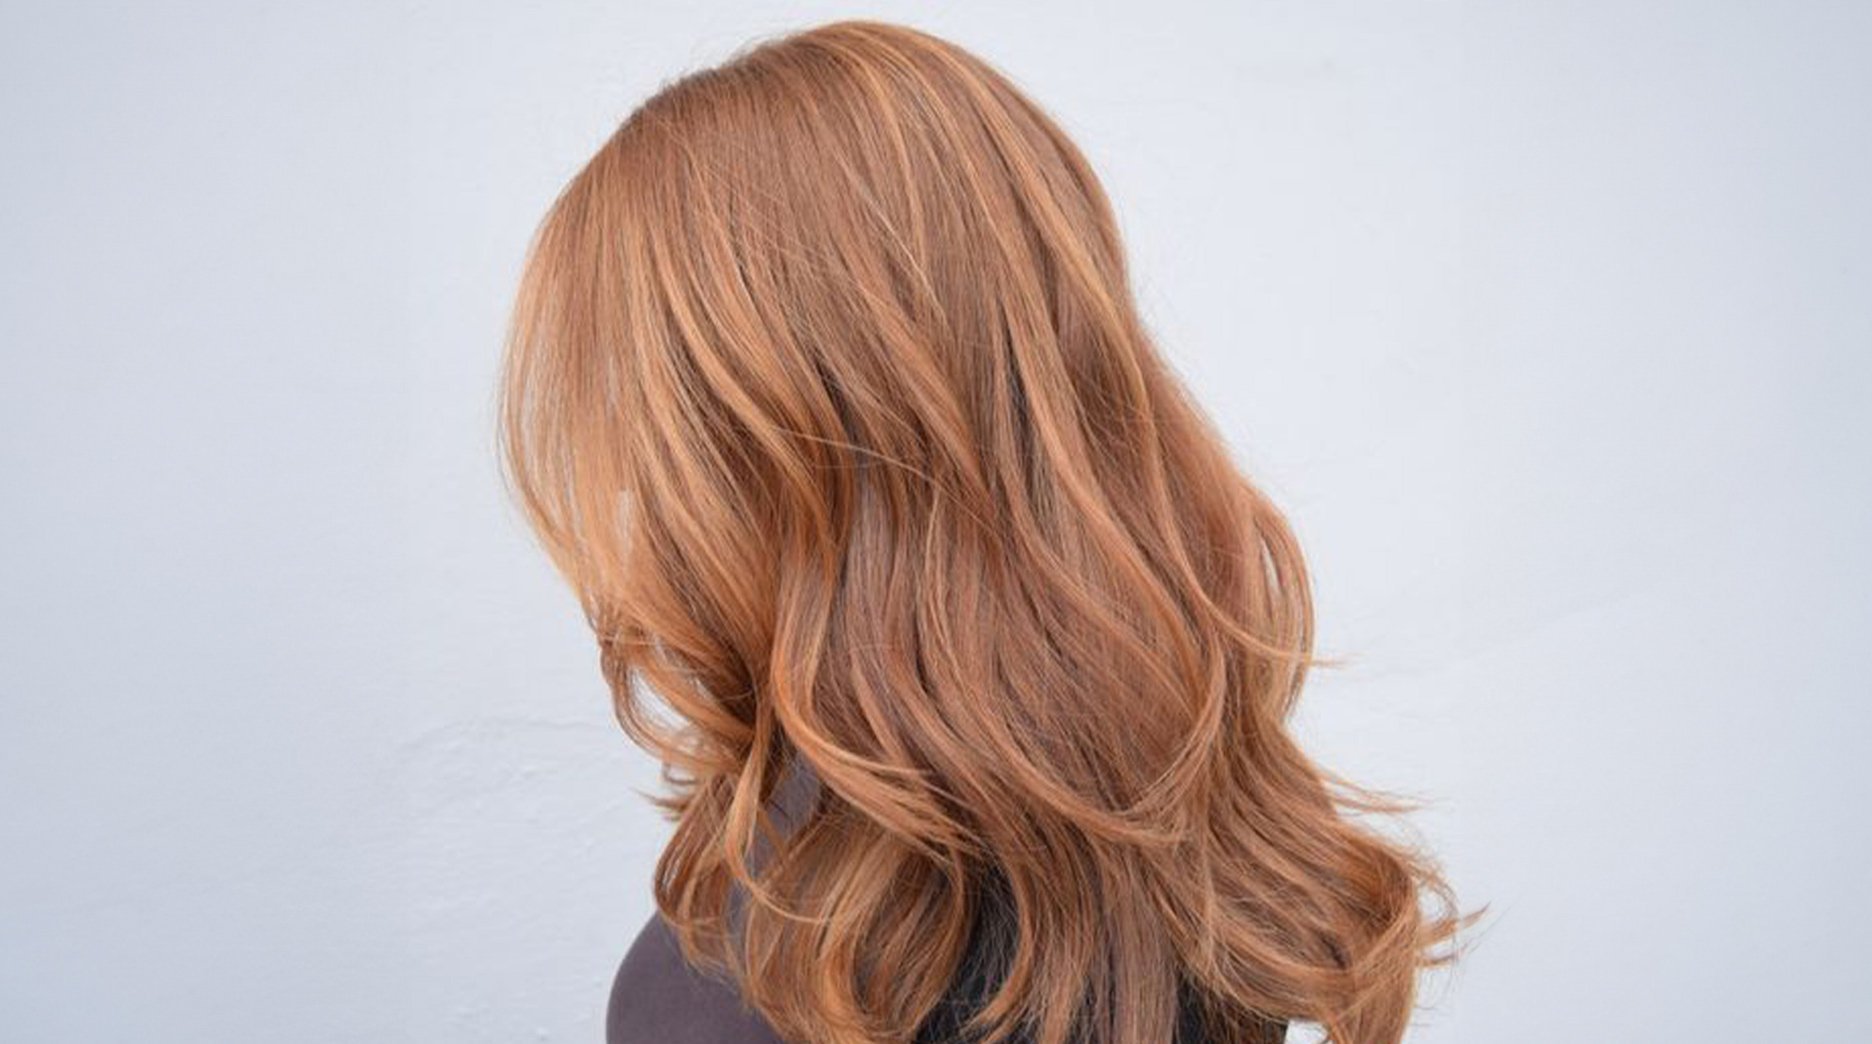 https://www.garnierusa.com/-/media/project/loreal/brand-sites/garnier/usa/us/articles/hair-color/try-copper-hair-color/garnier-copper-hair-article-header-image-936x522-x2.jpg?rev=8bc6a363d3824cb0b194d866ad47e831